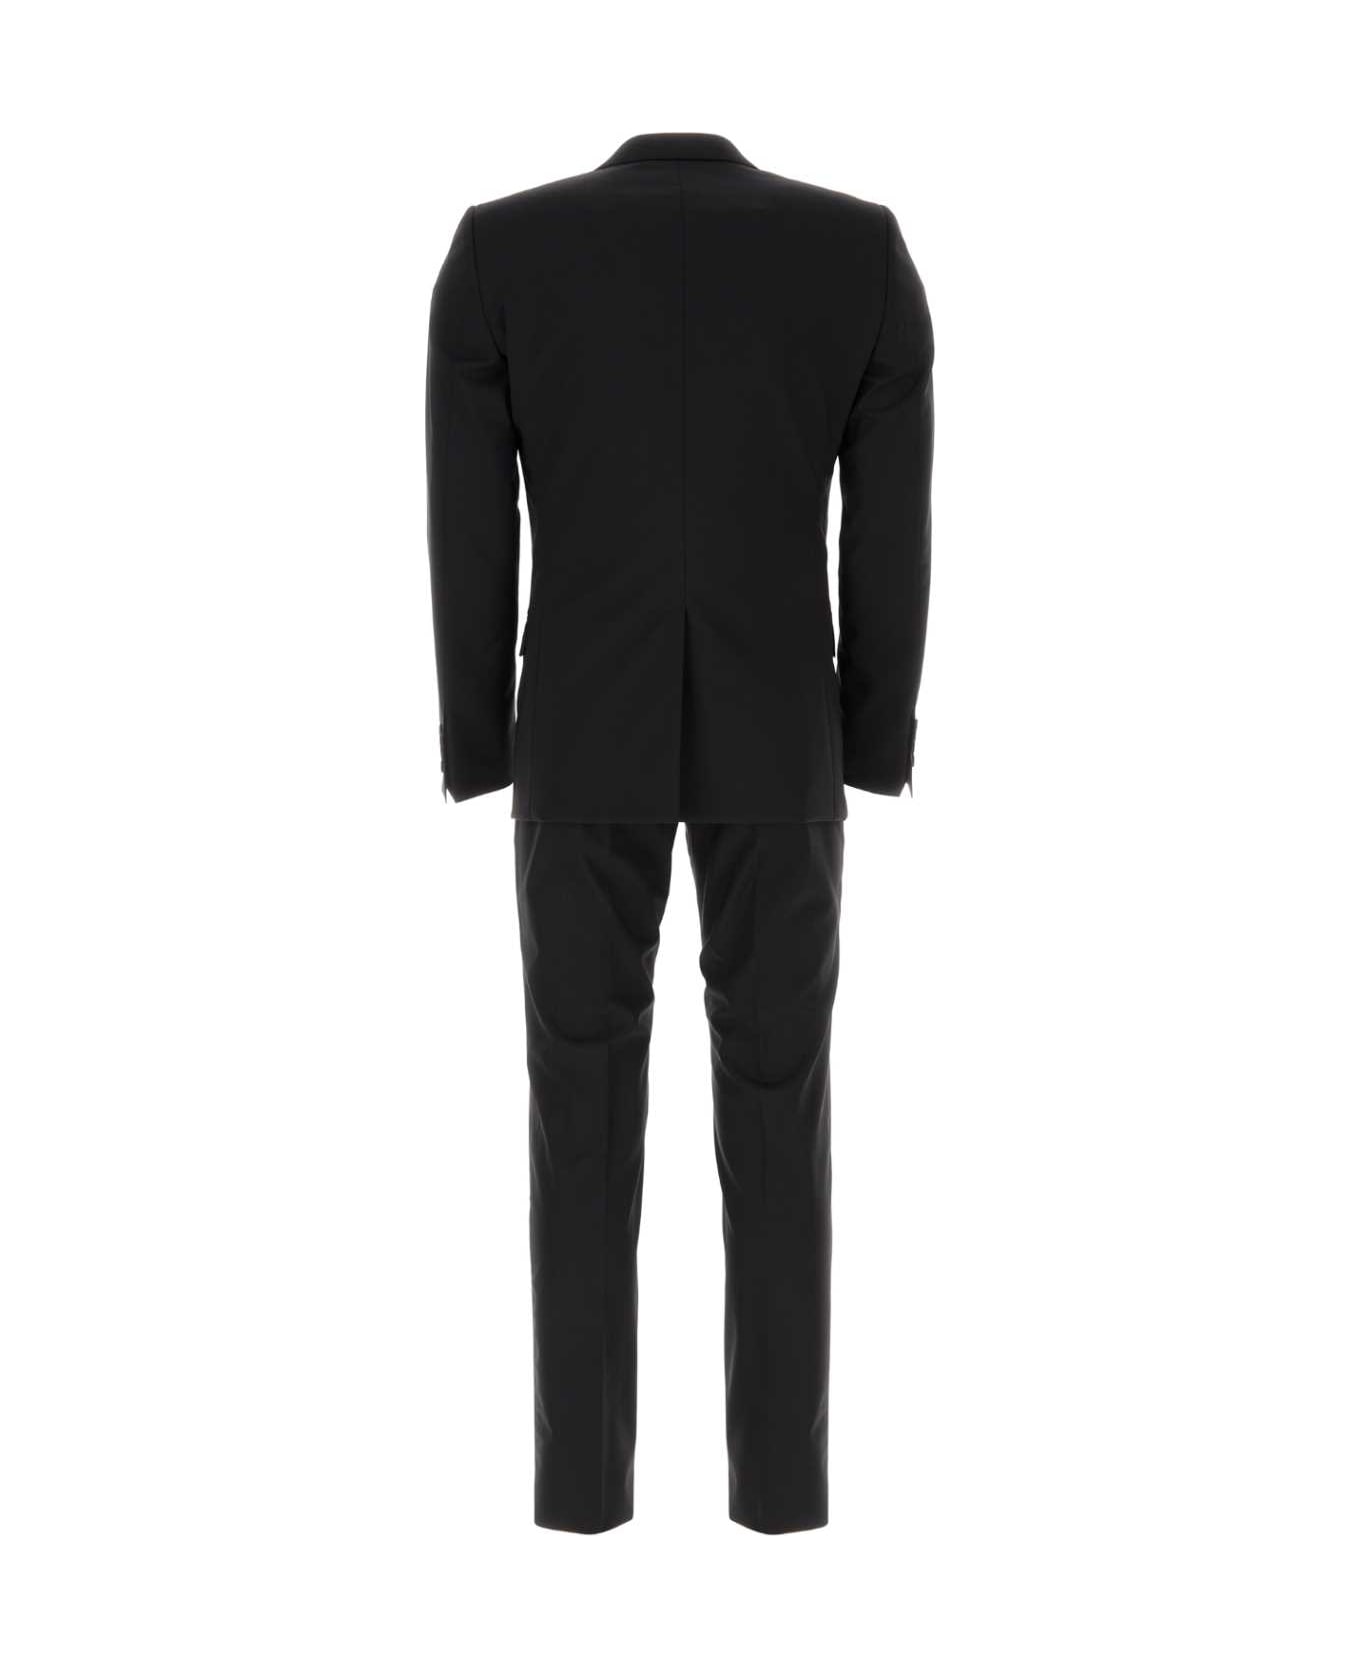 Dolce & Gabbana Black Light Wool Martini Suit - N0000 スーツ